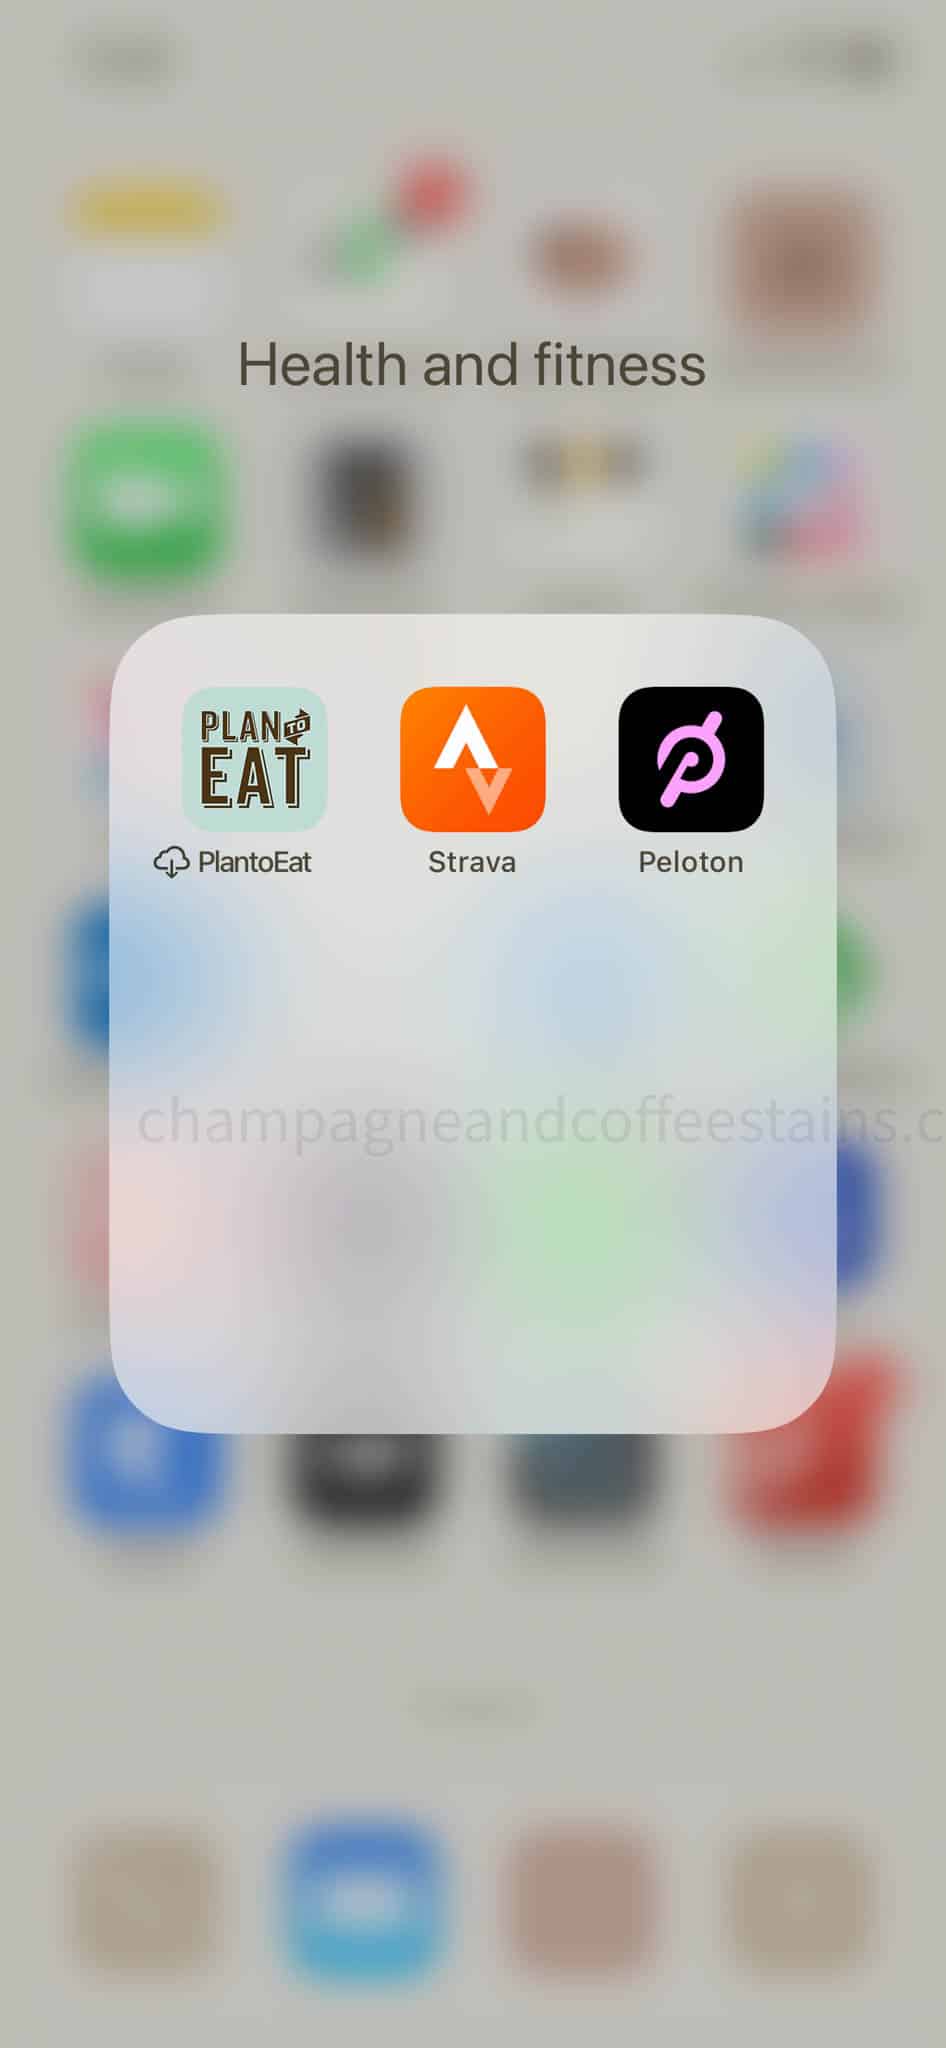 iphone screen with peloton app icon